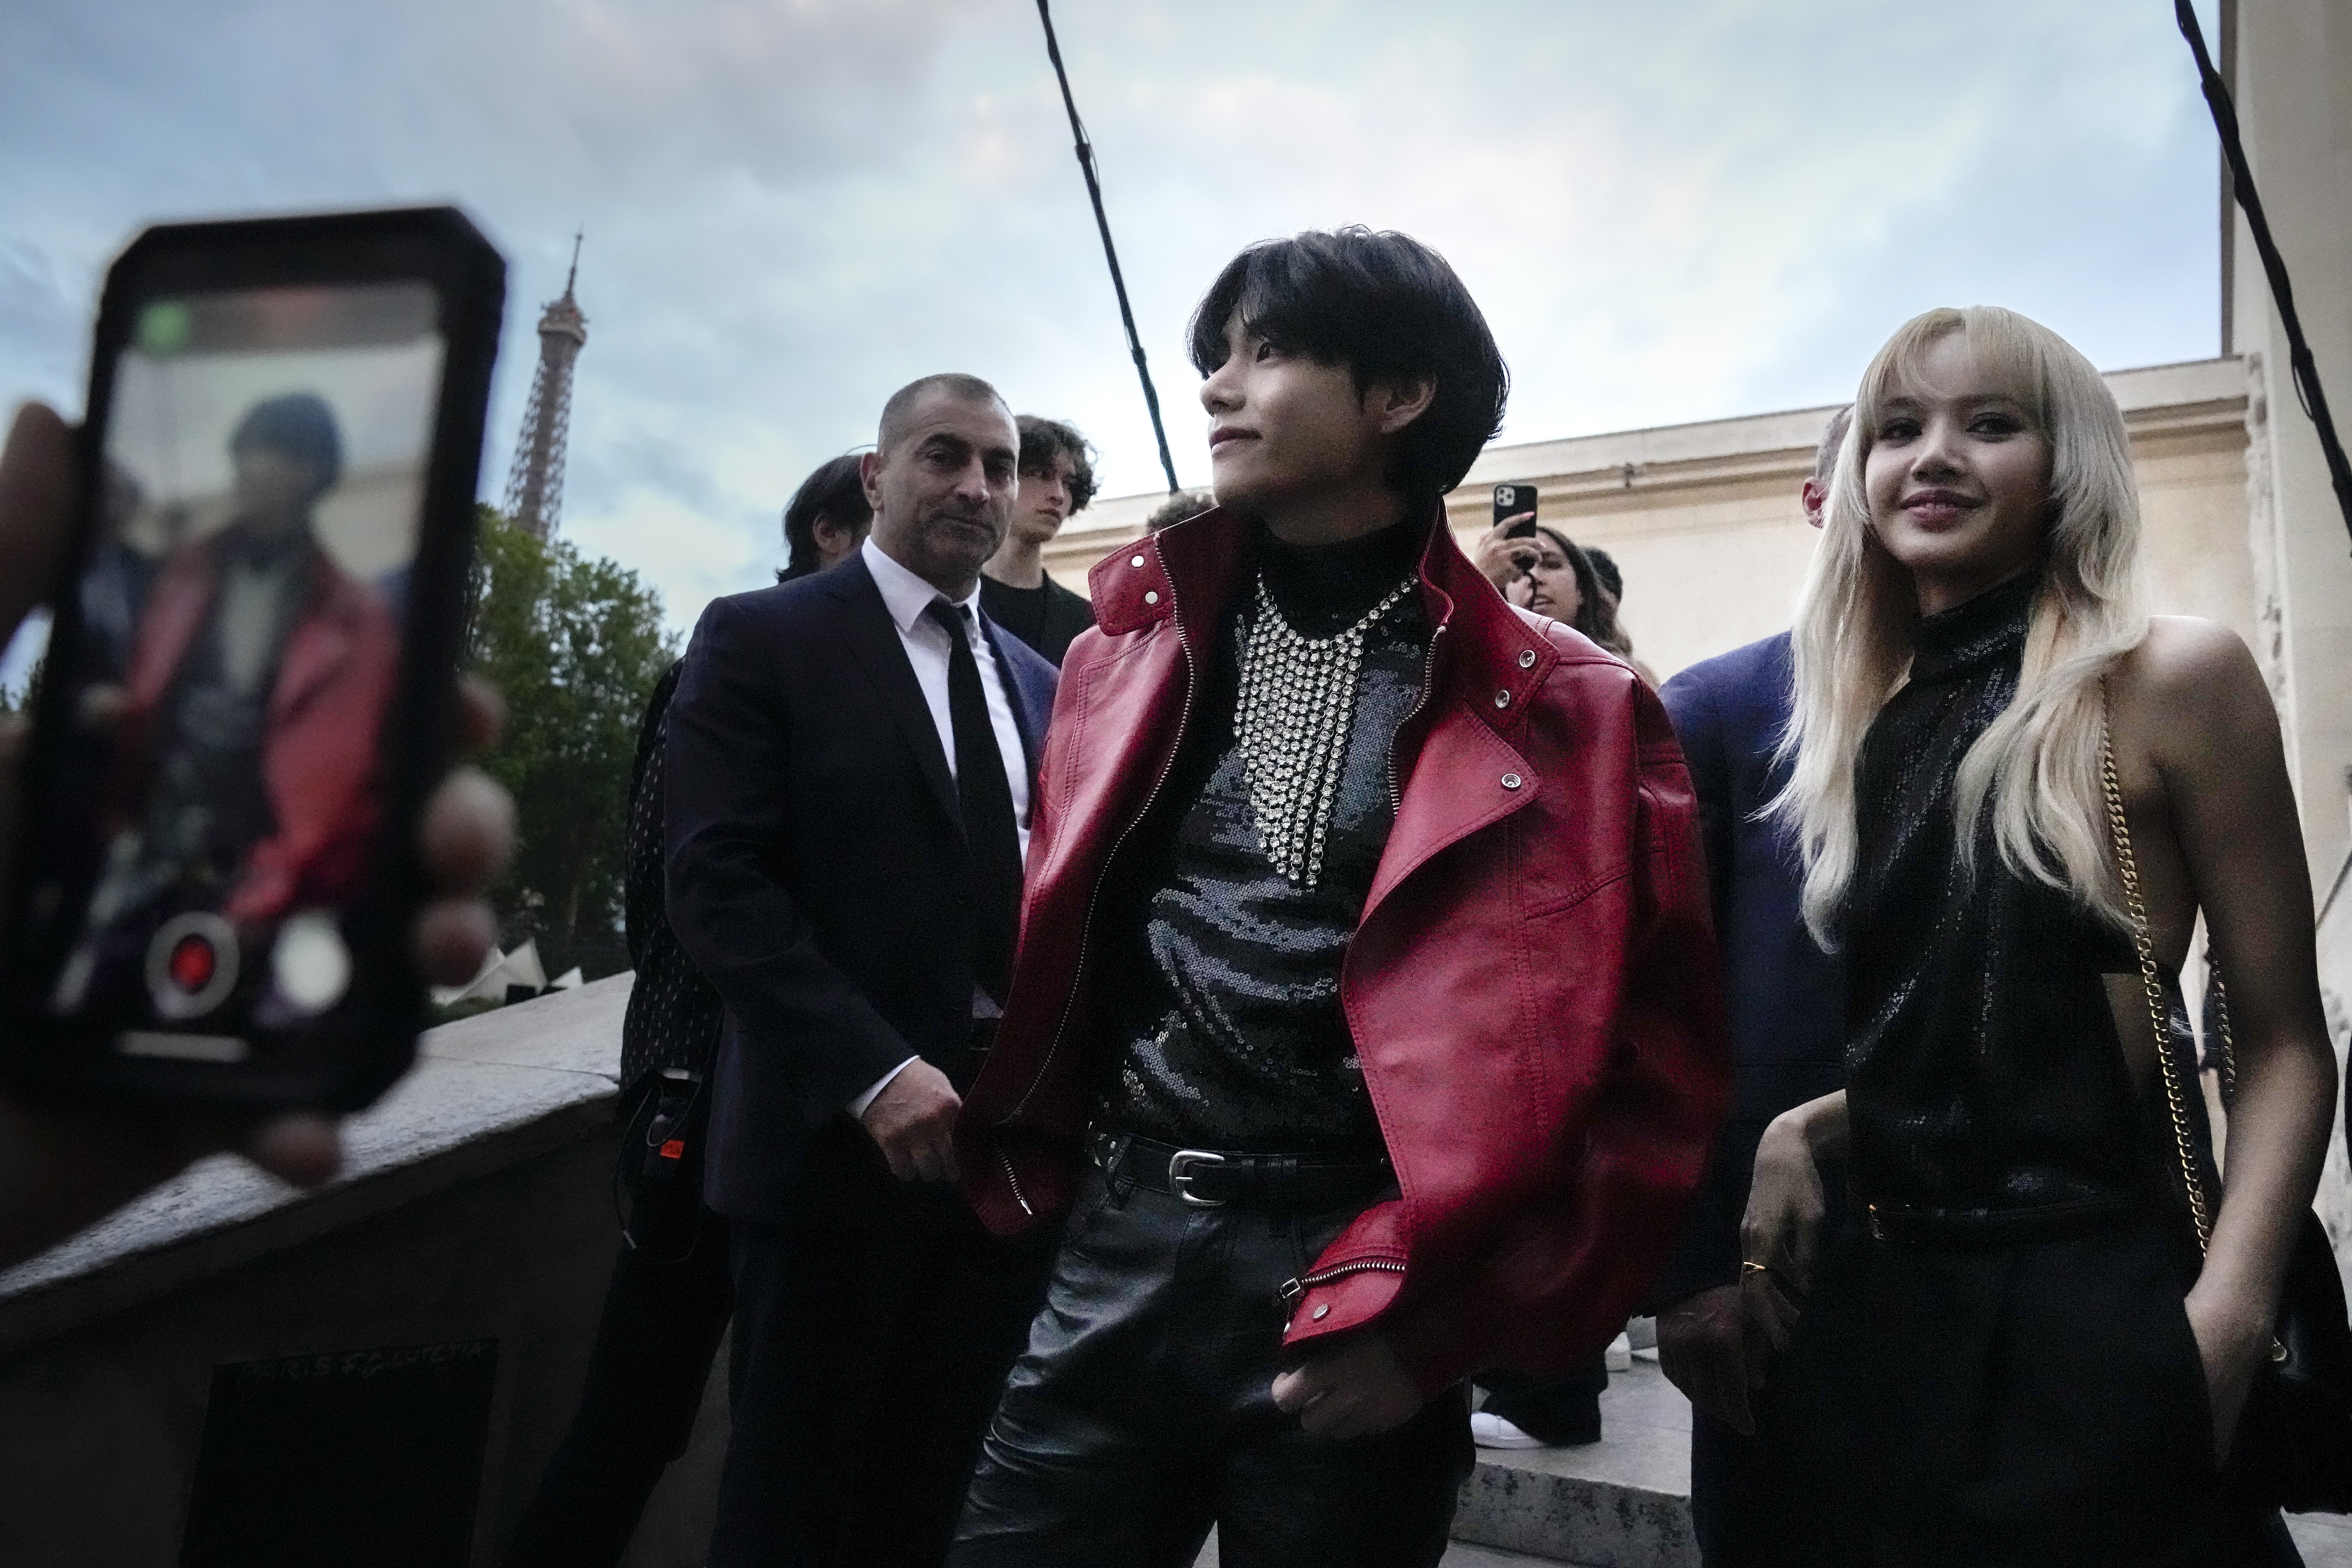 Kim Taehyung aka V from BTS draws huge crowds at Paris Fashion Week - News